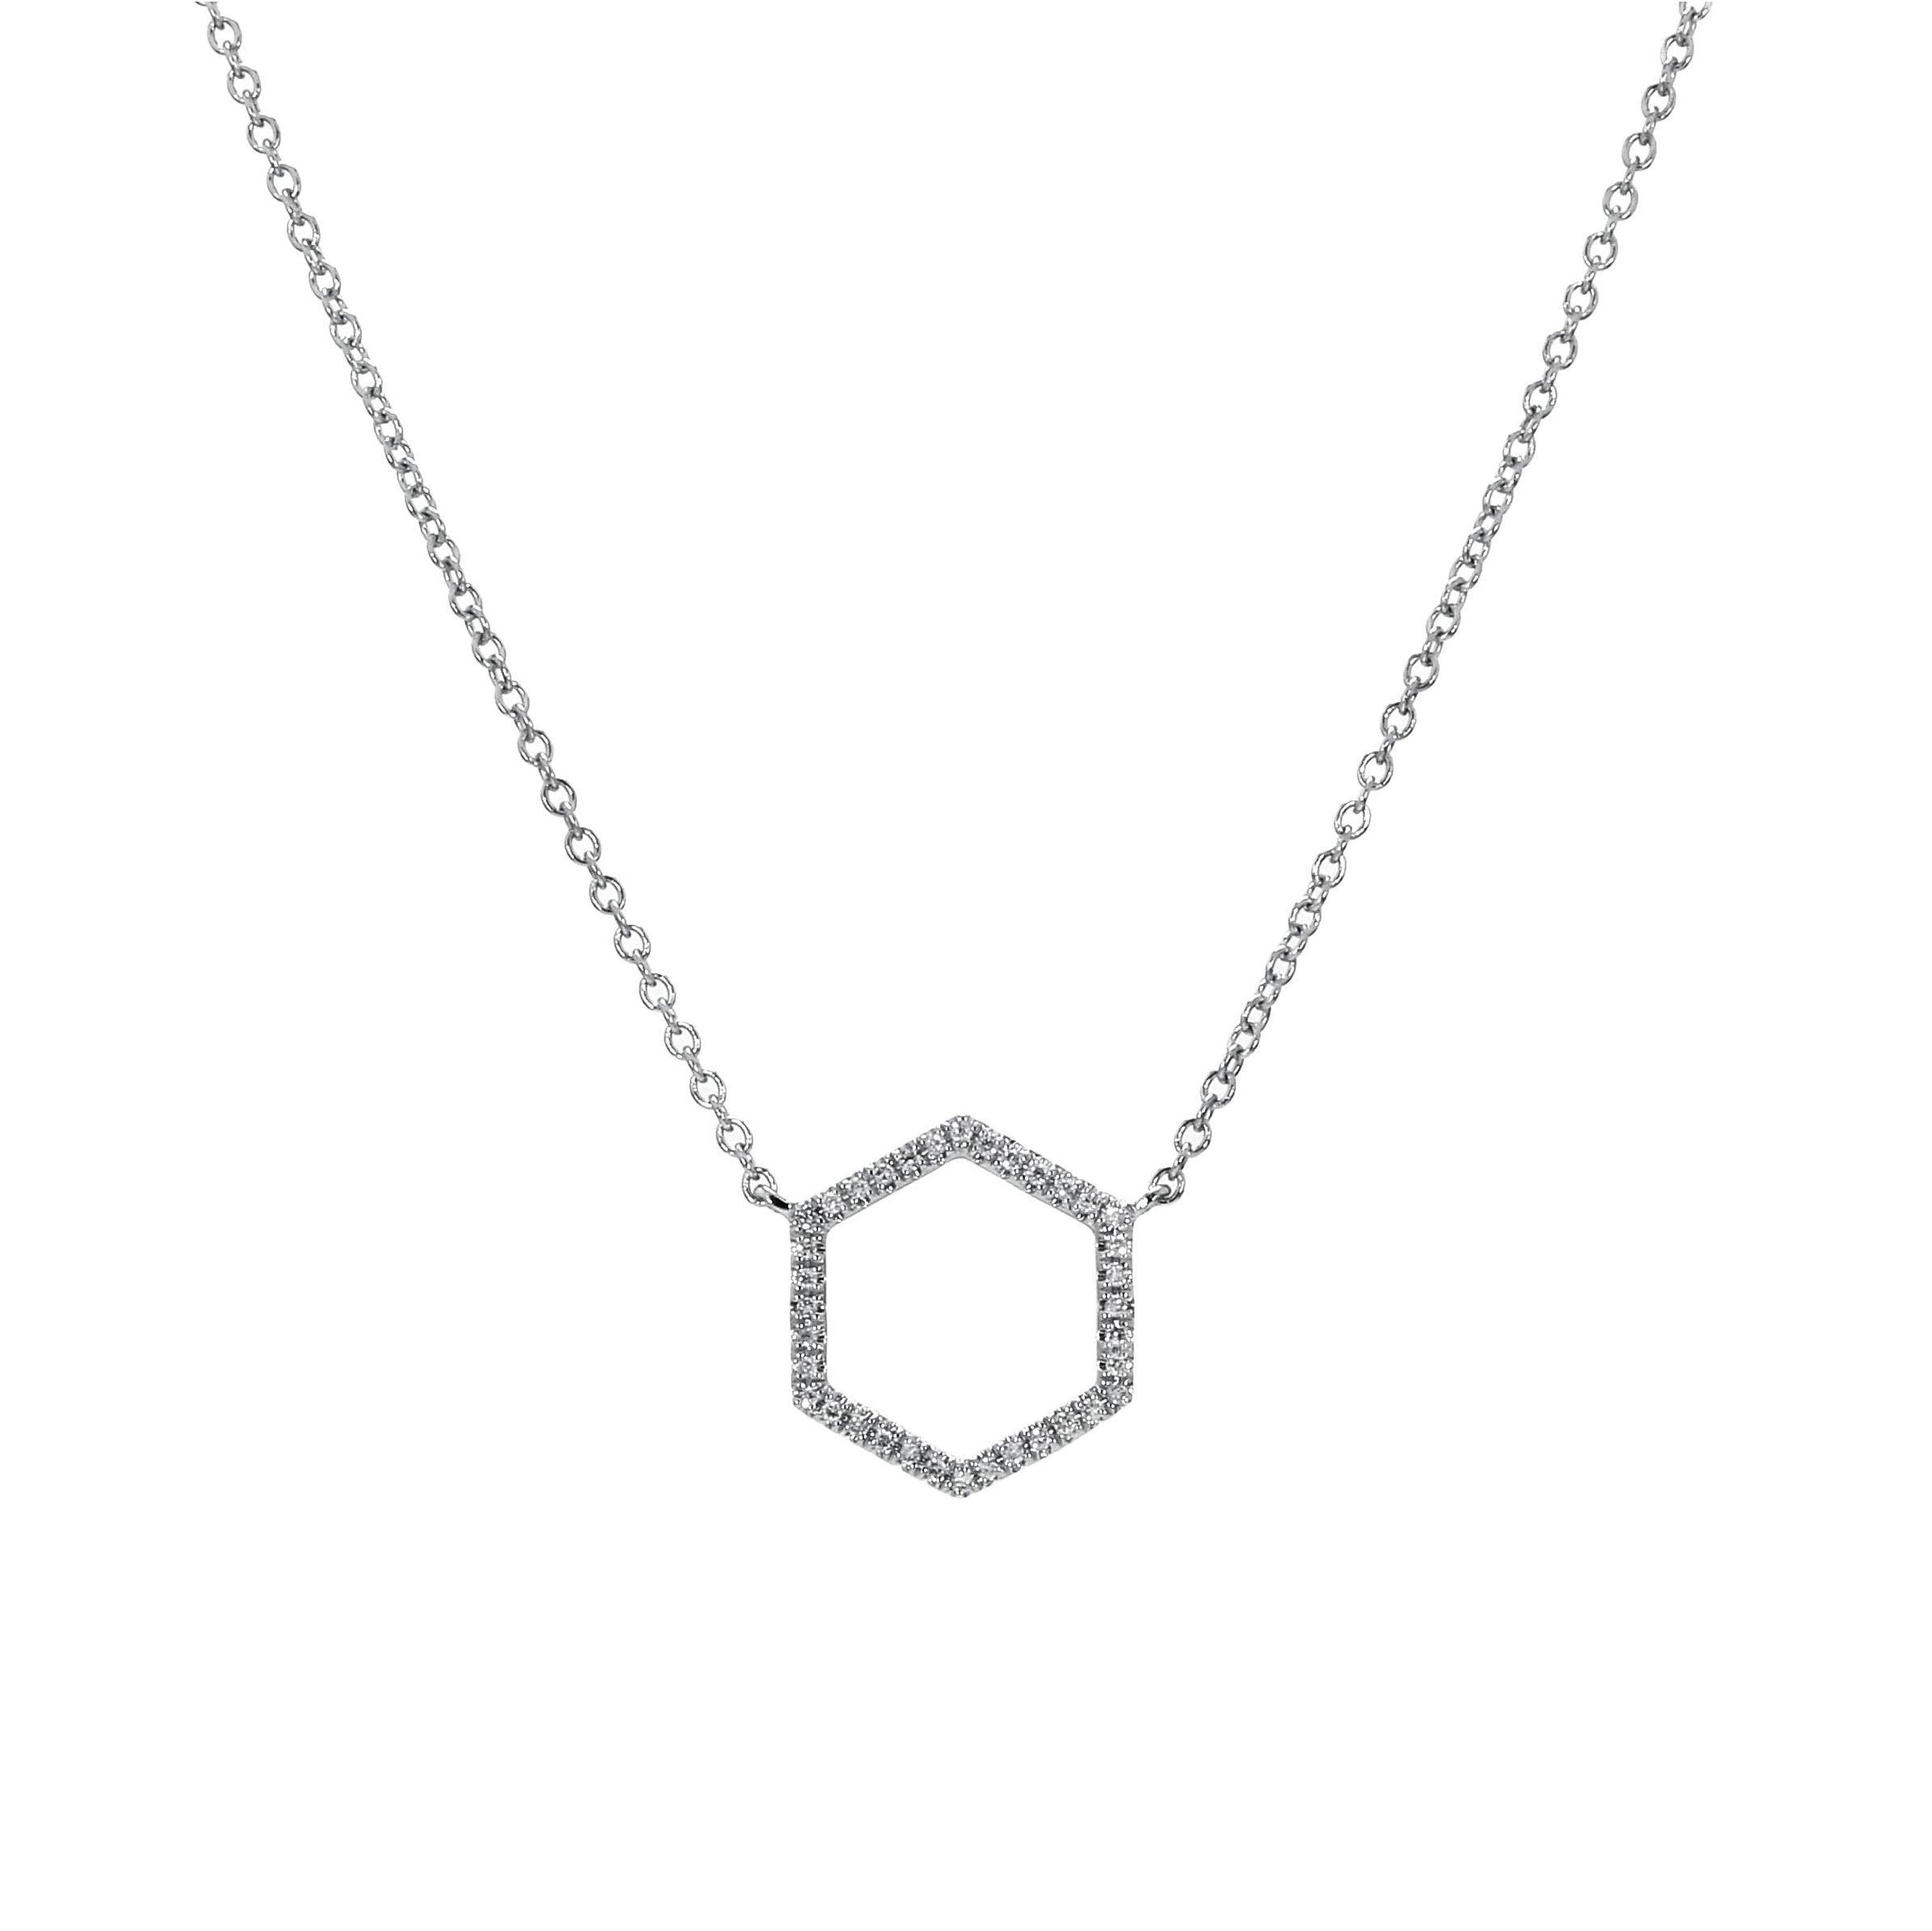 Adamar Jewels LUZ Nube Necklace in 18K white gold set with diamonds